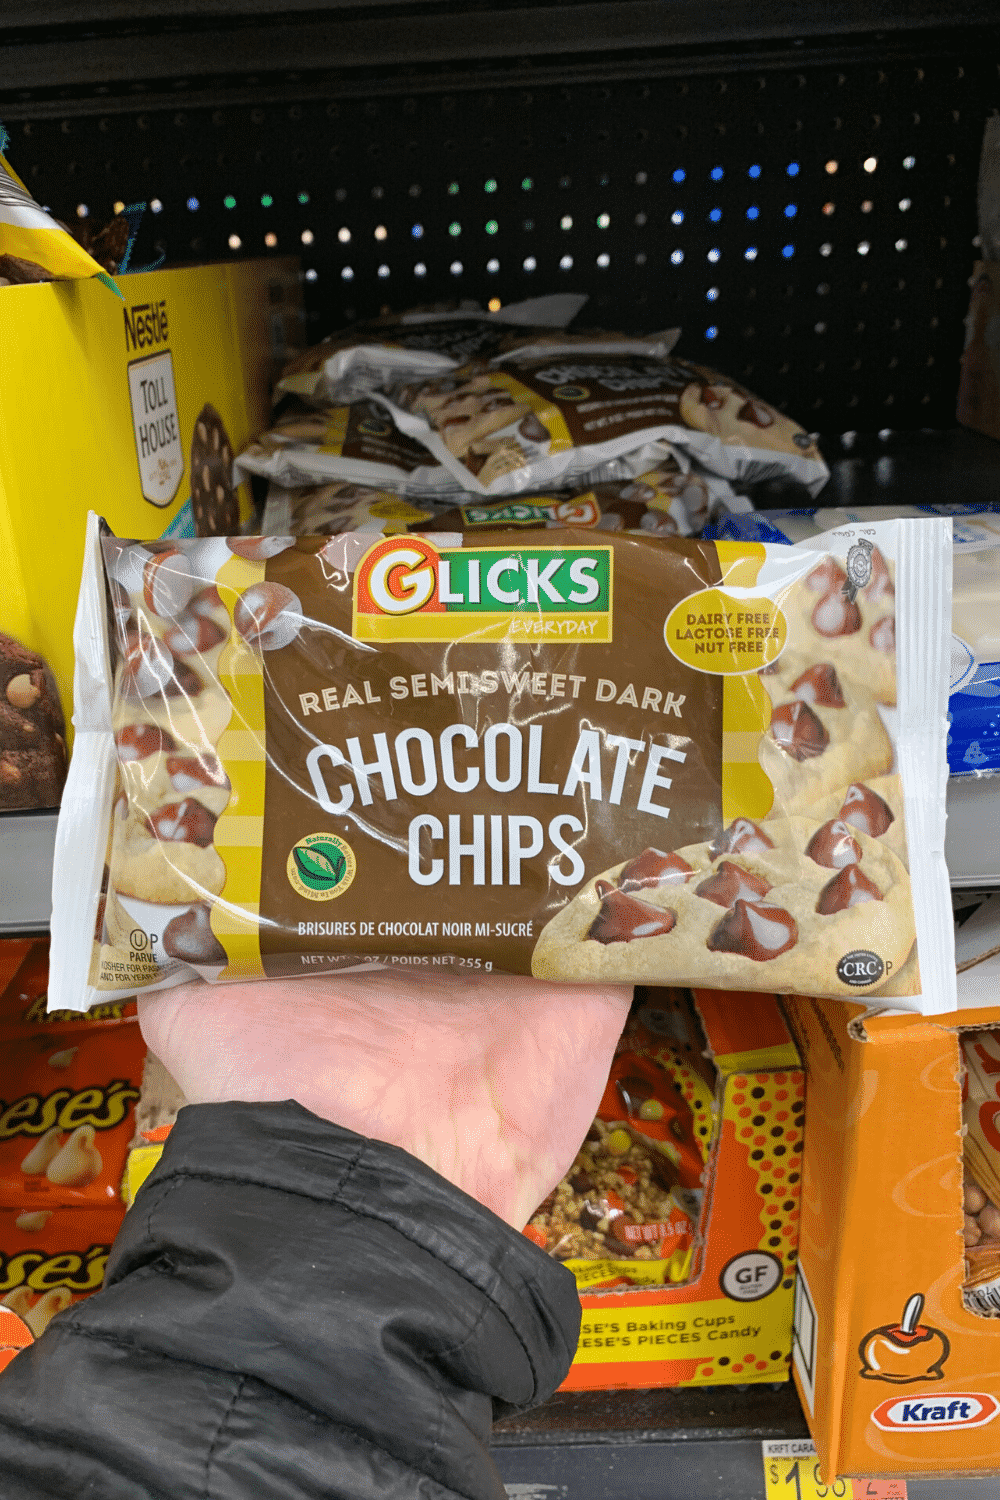 A hand holding Glick's vegan real semi sweet dark chocolate.